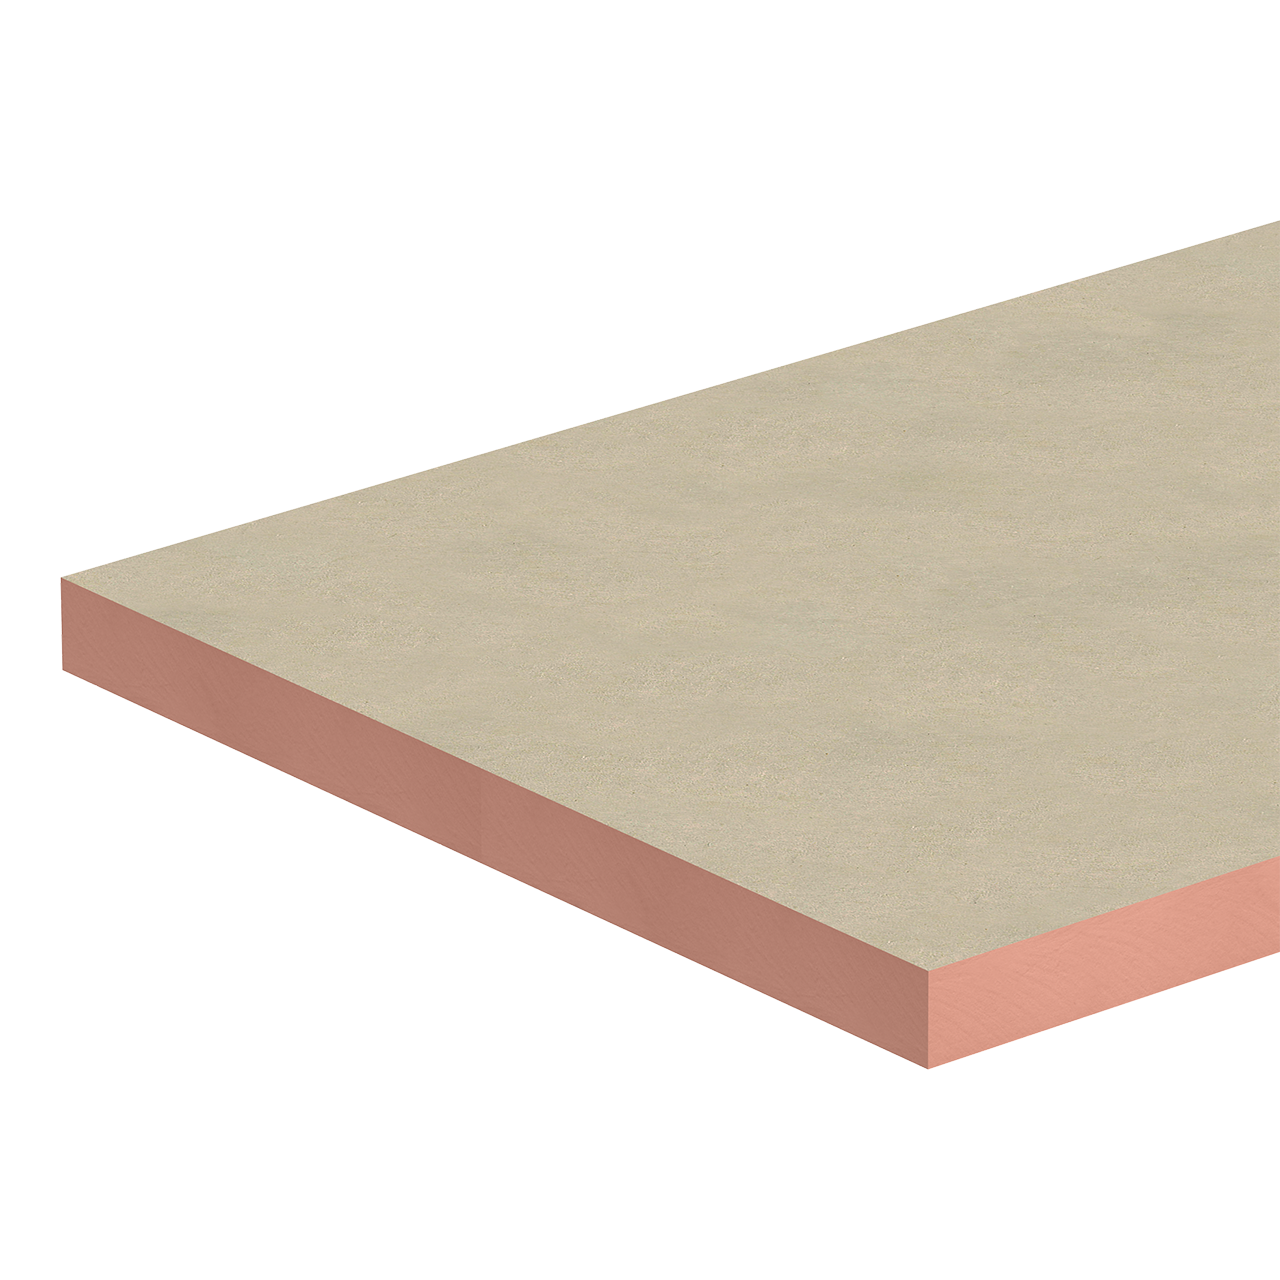 Kingspan Kooltherm External Wall Board - solid wall insulation